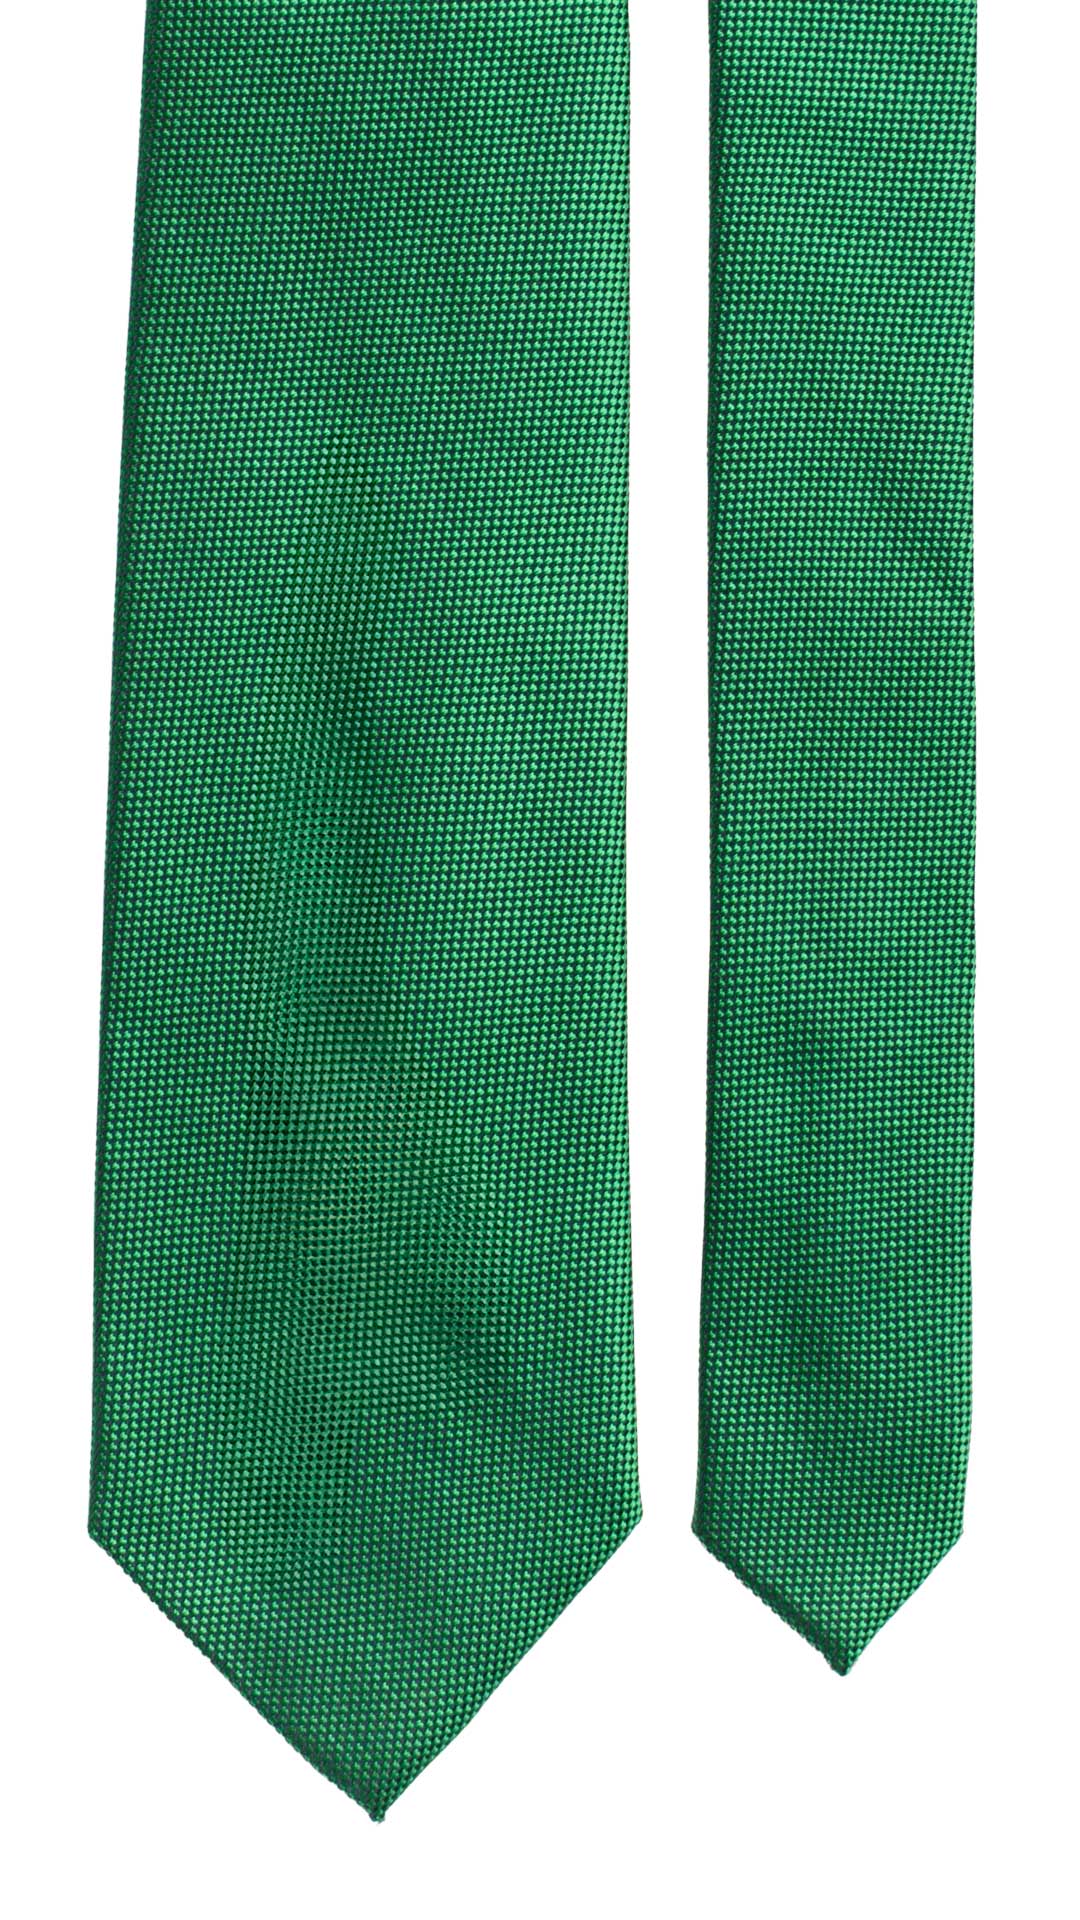 Cravatta di Seta Verde Tinta Unita 7032 Pala